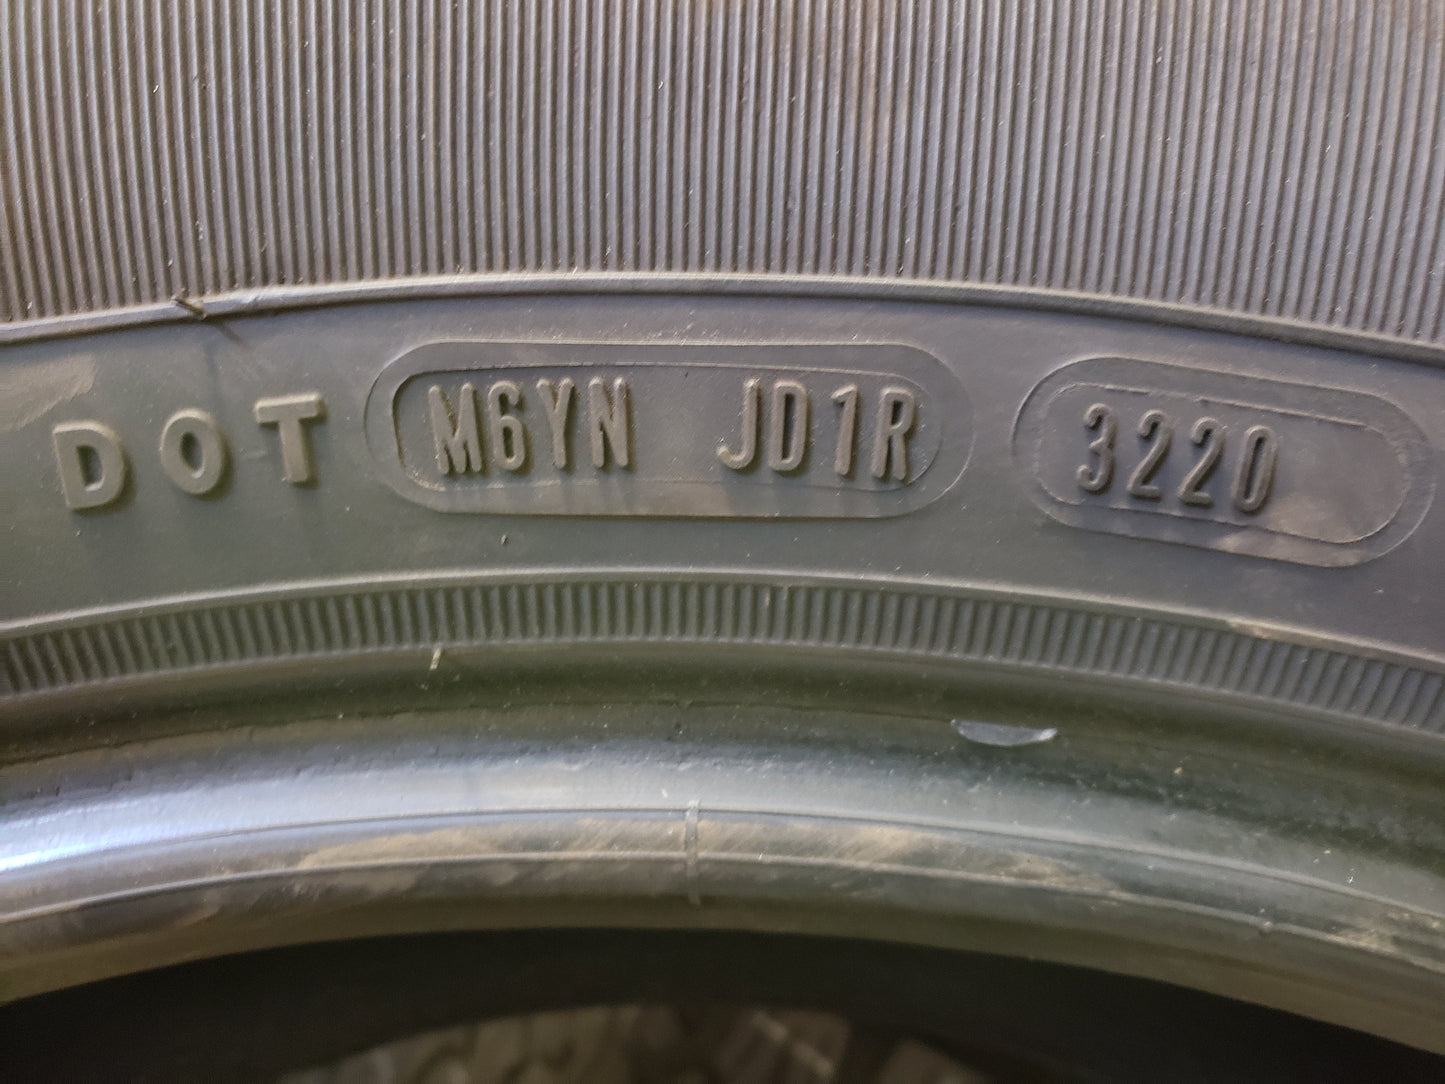 SET OF 2 275/60R20 Goodyear Wrangler SR-A 114 S SL - Used Tires